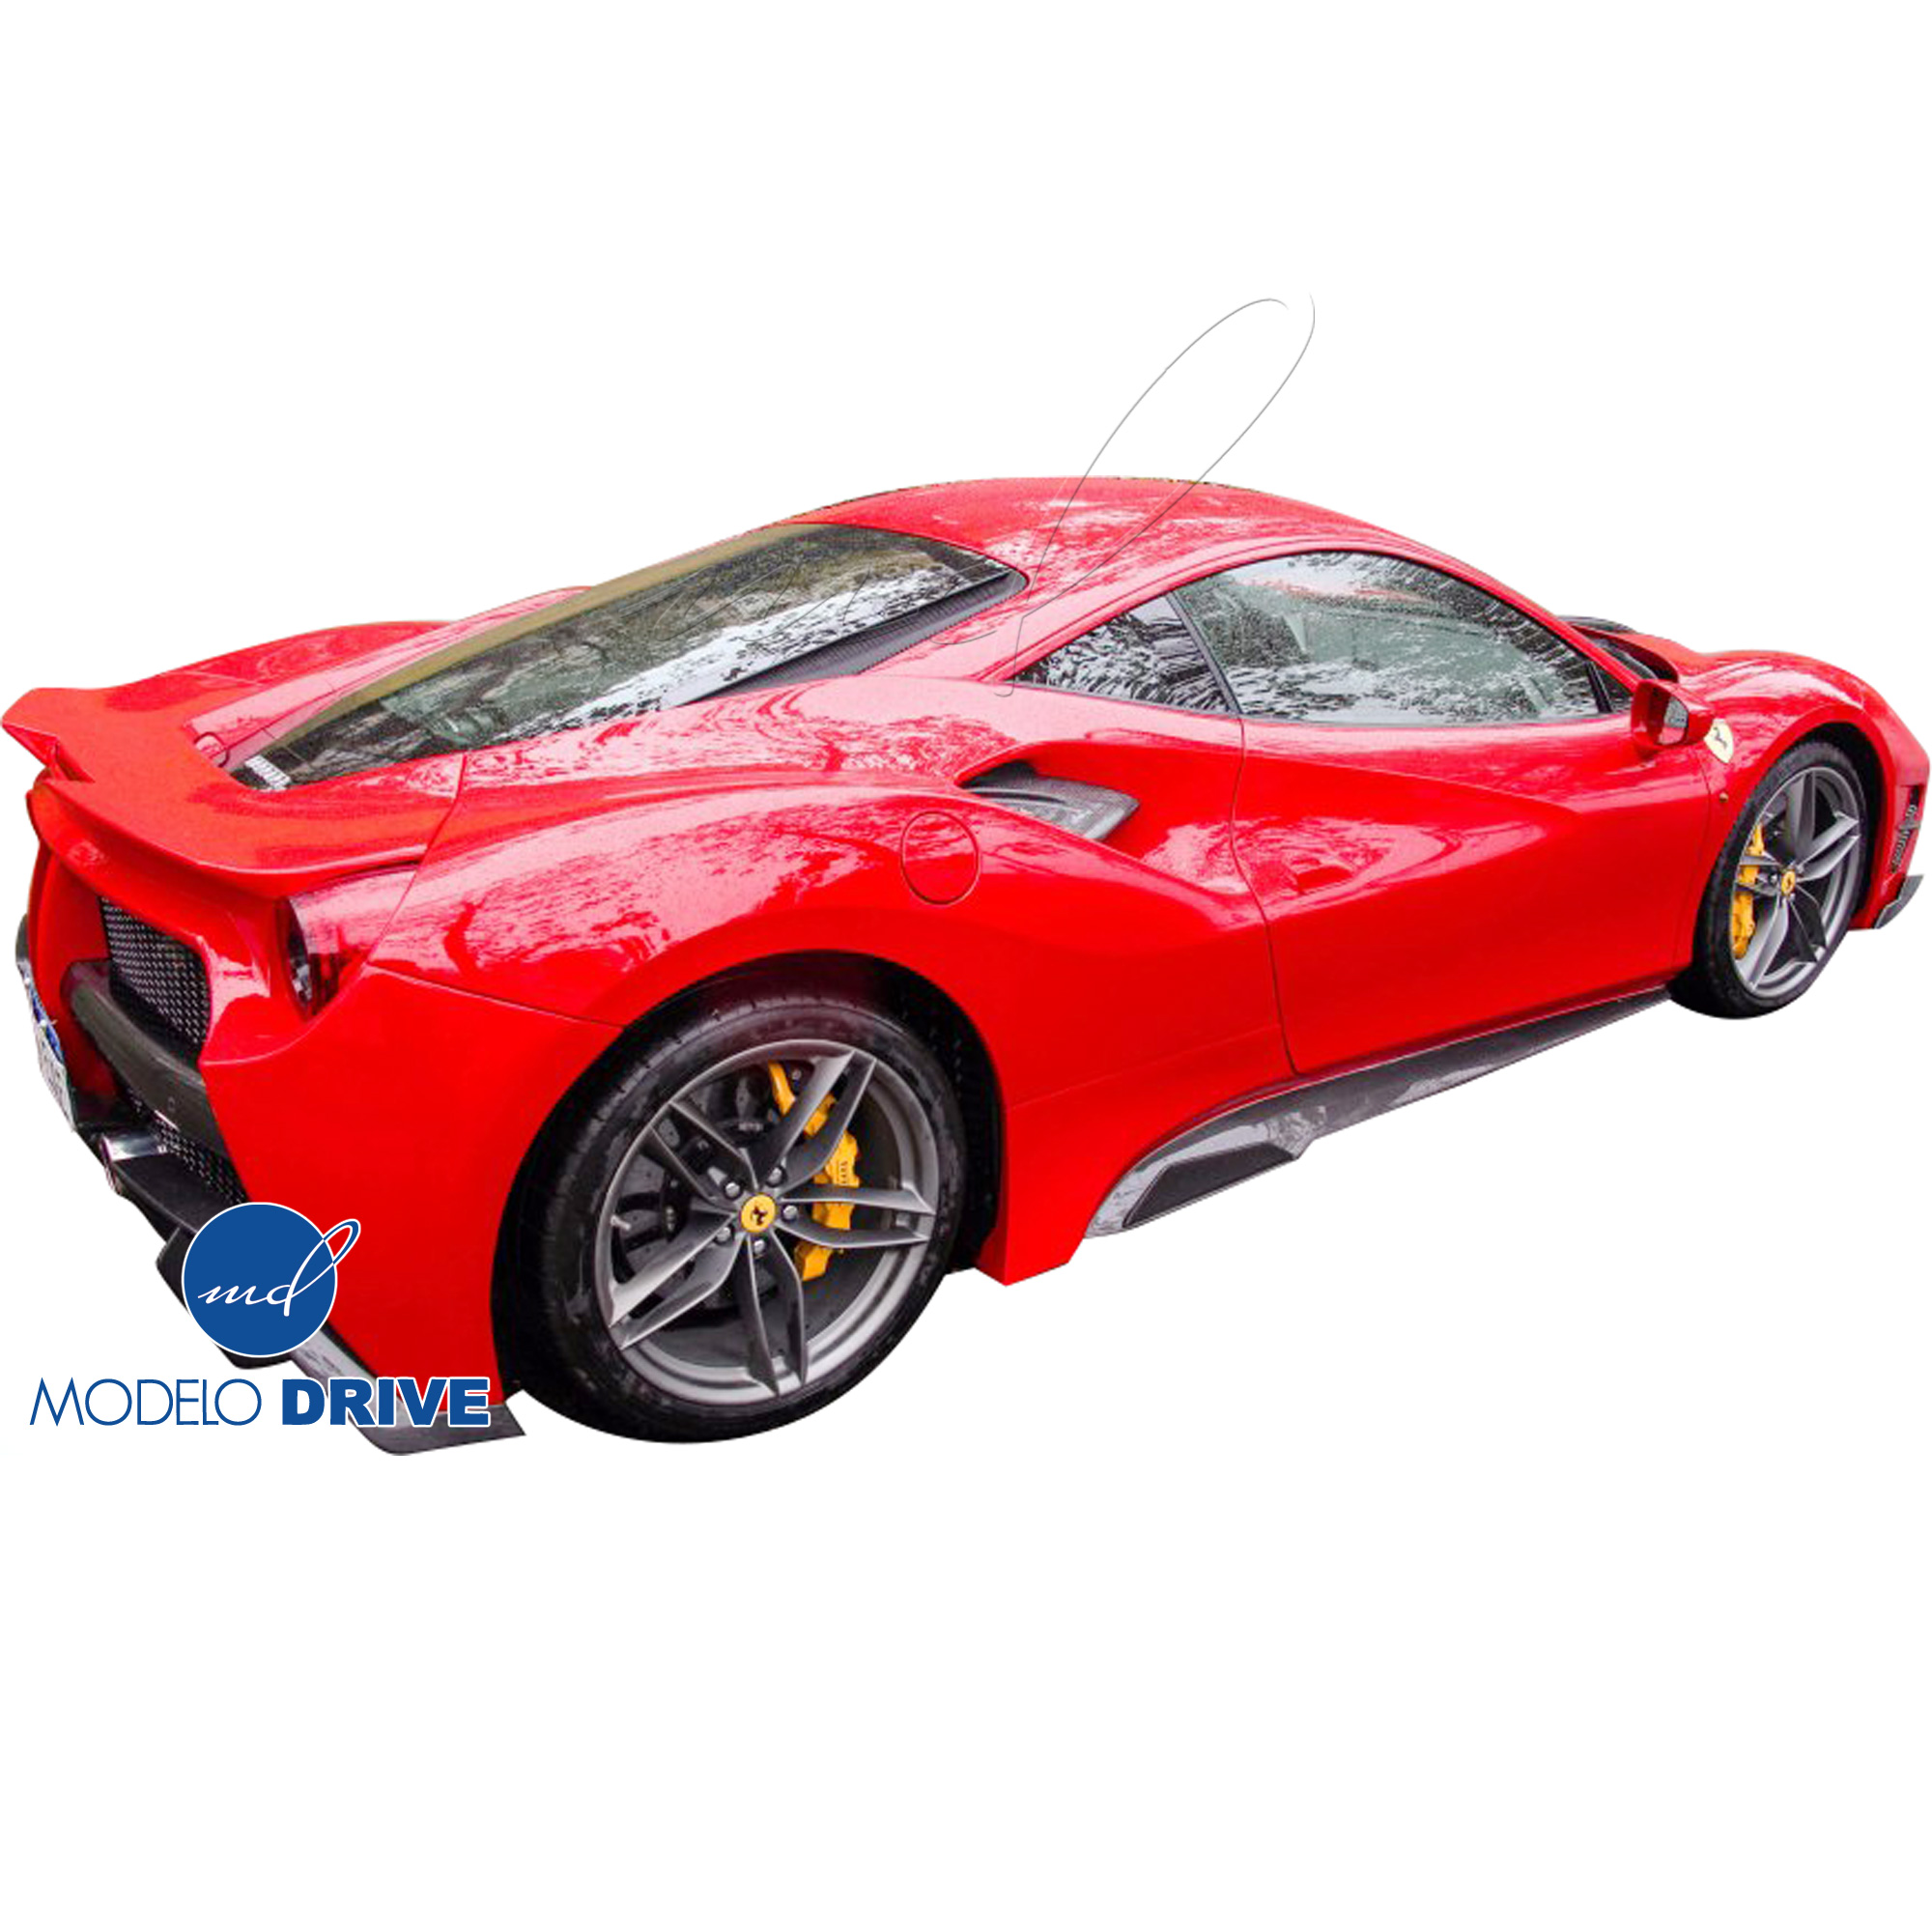 ModeloDrive Partial Carbon Fiber MDES Side Skirts > Ferrari 488 GTB F142M 2016-2019 - Image 6